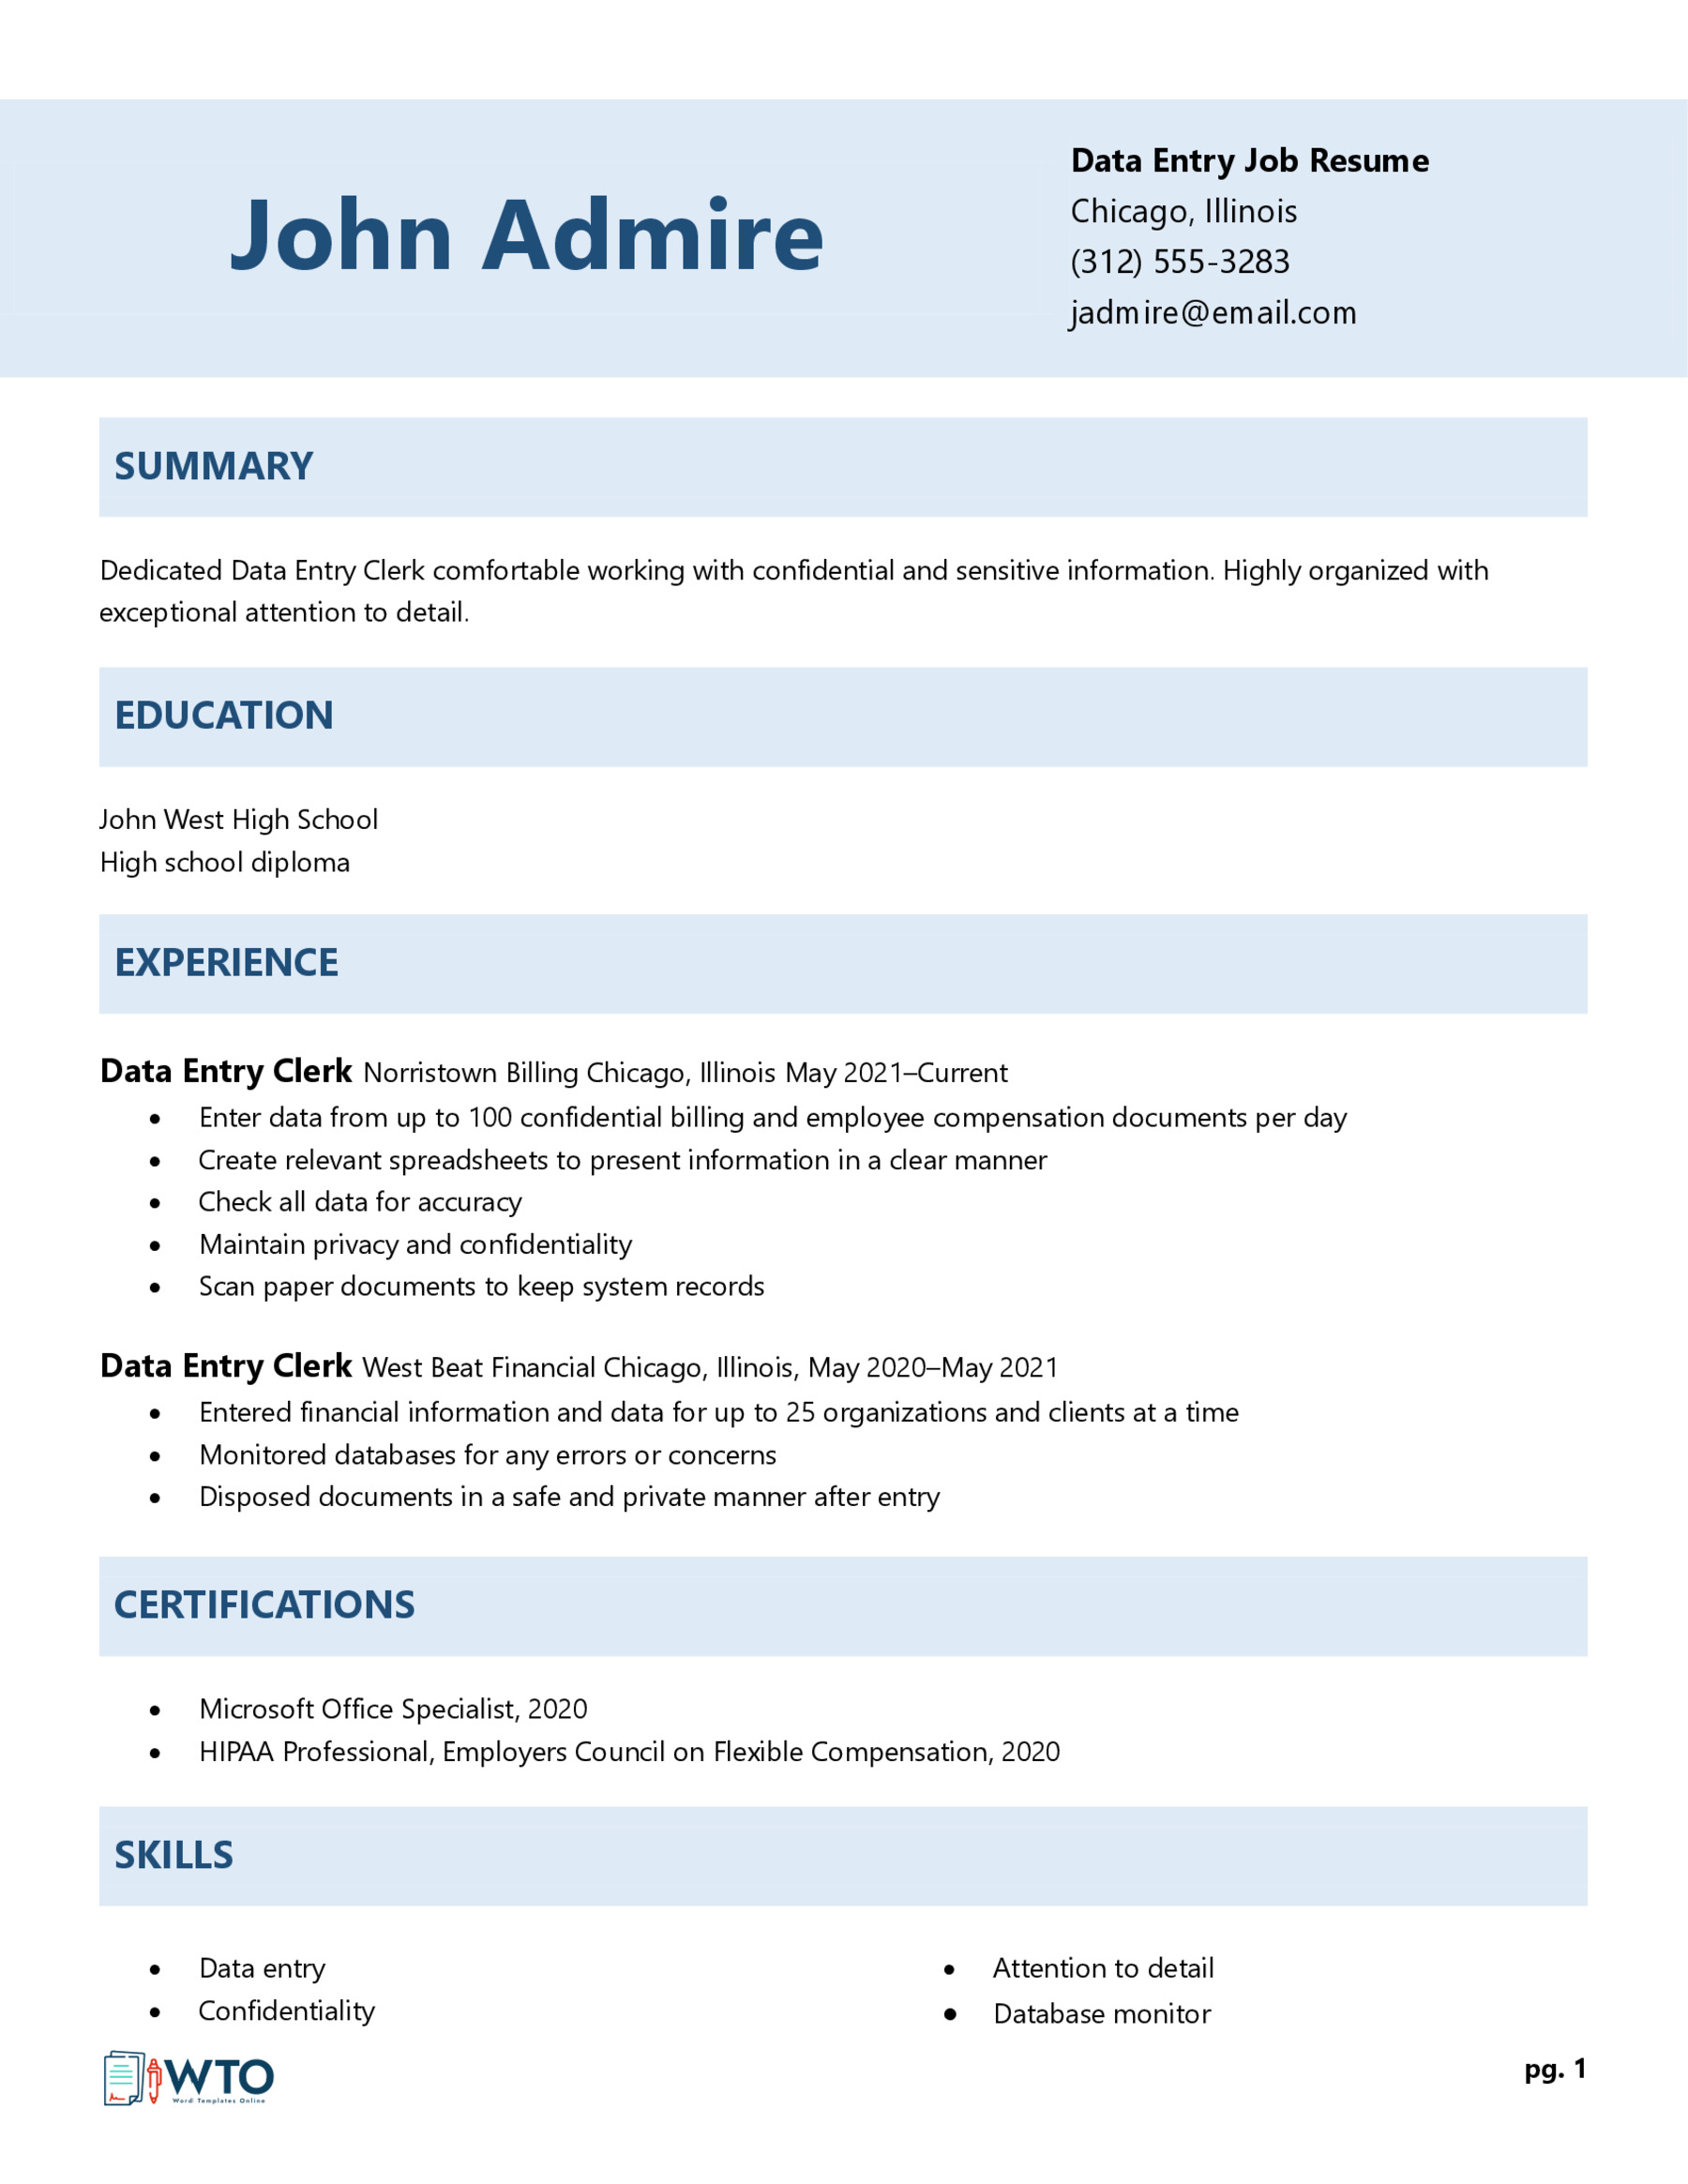 Data Entry Job Resume - Effective Format